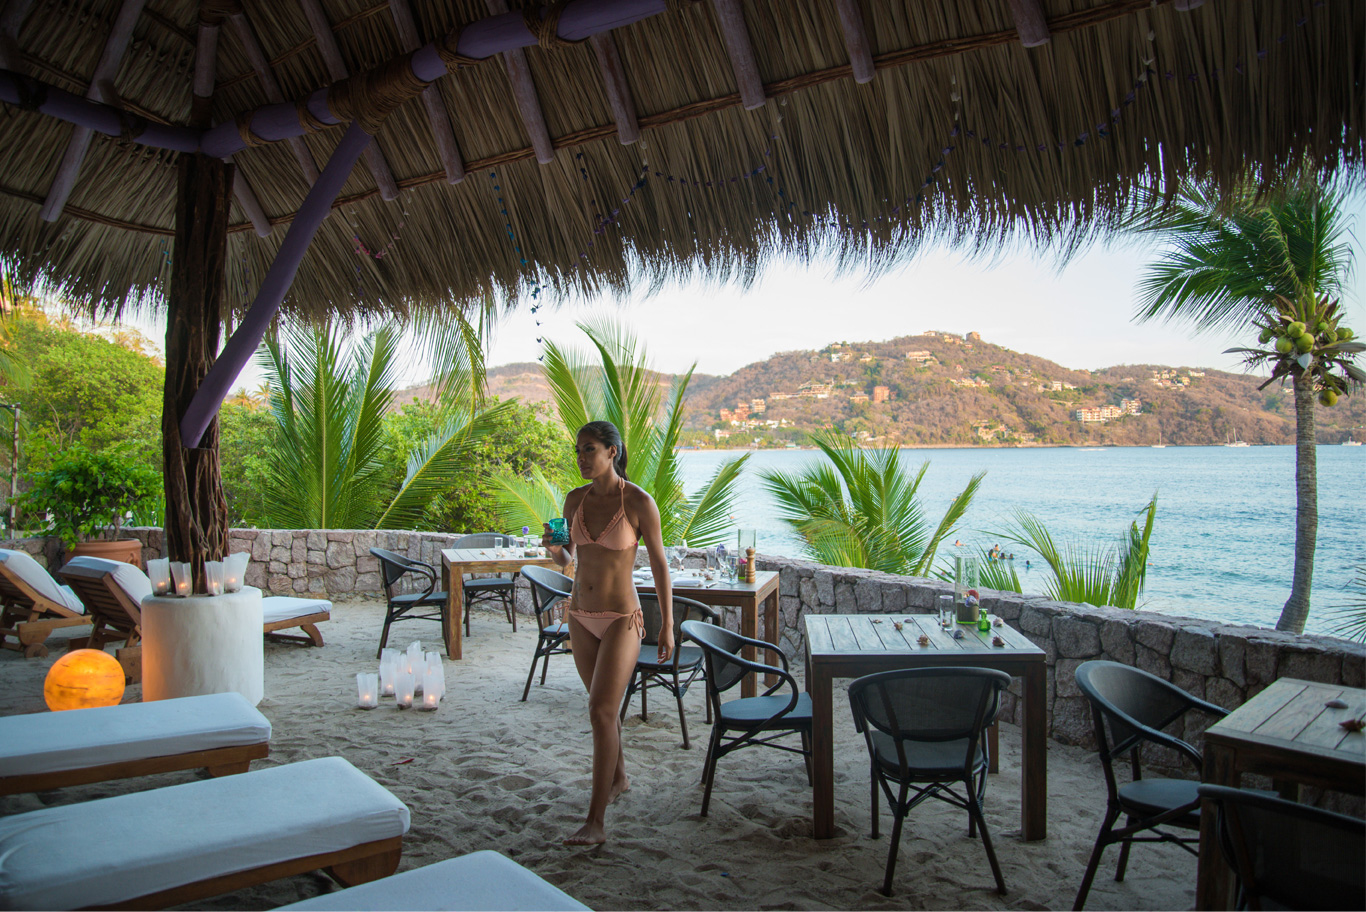 Palapa luxury villa beach lounge Zihuatanejo Ixtapa Mexico : El Ensueno